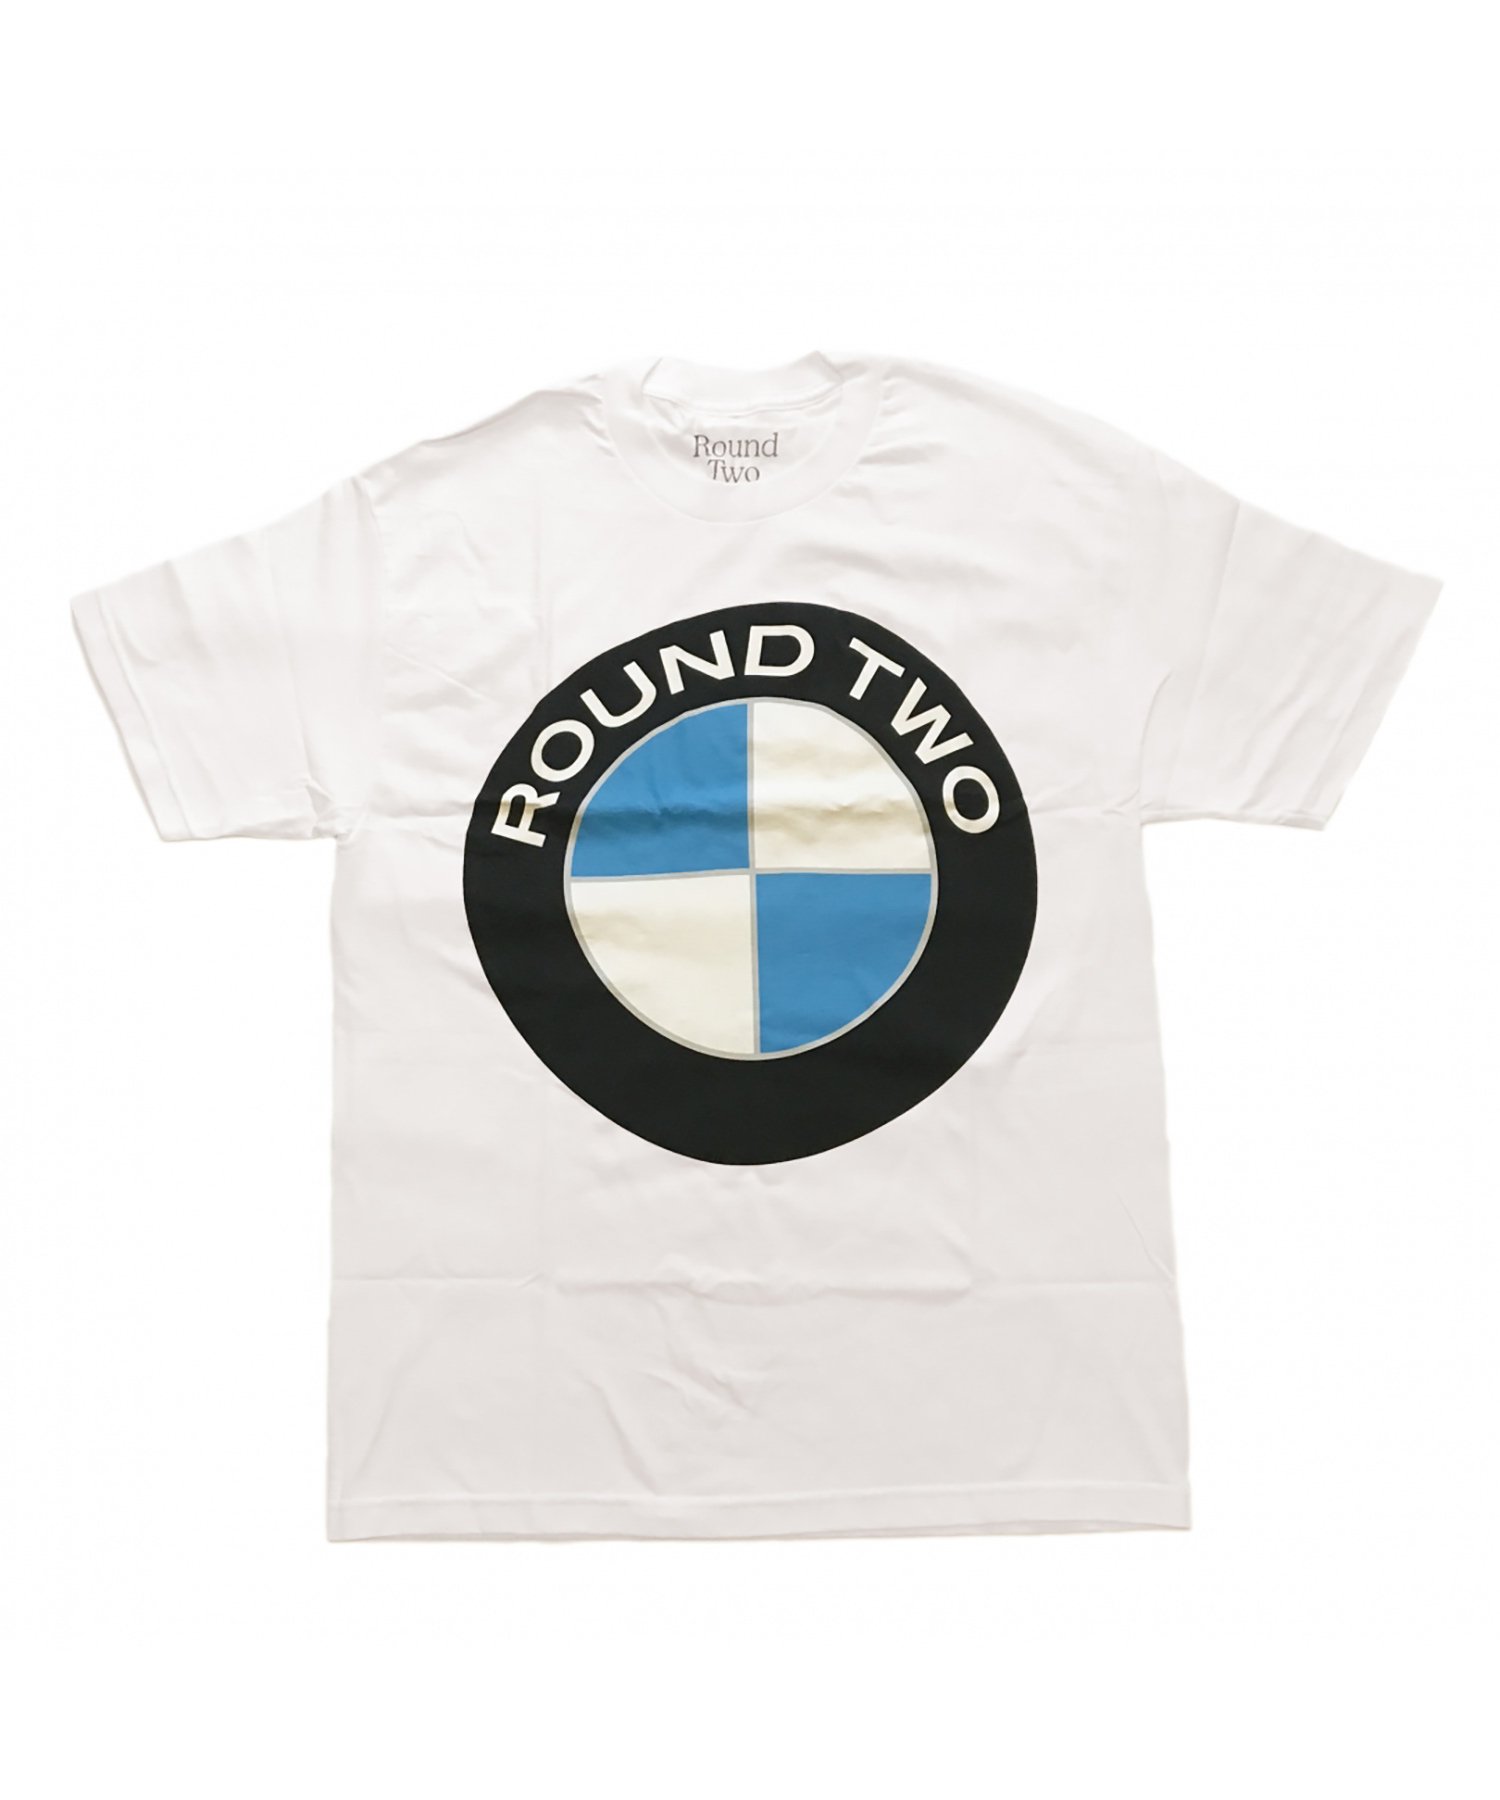 Round Two(ラウンドツー) Tシャツ Round Two EMBLEM TEE 公式通販サイト | DLSM公式通販サイト